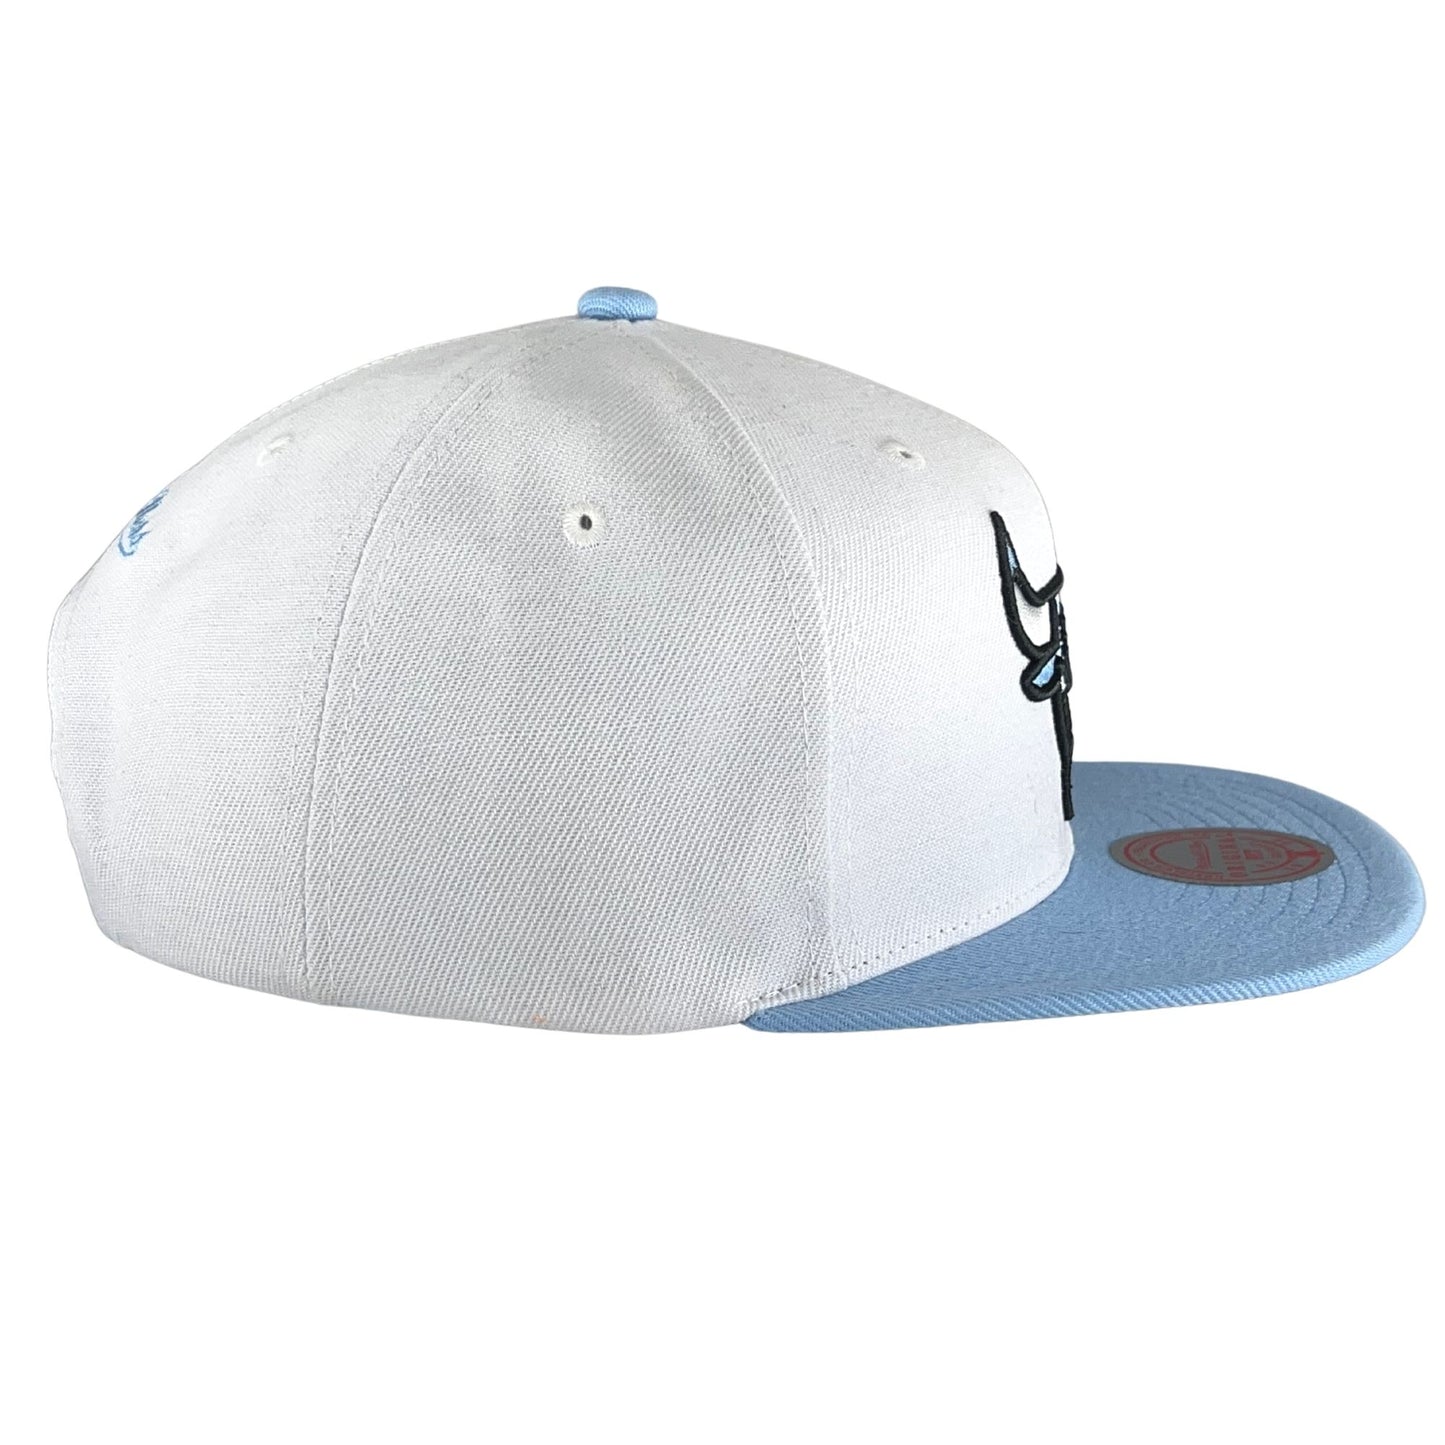 Chicago Bulls White/Columbia Blue Snapback Hat